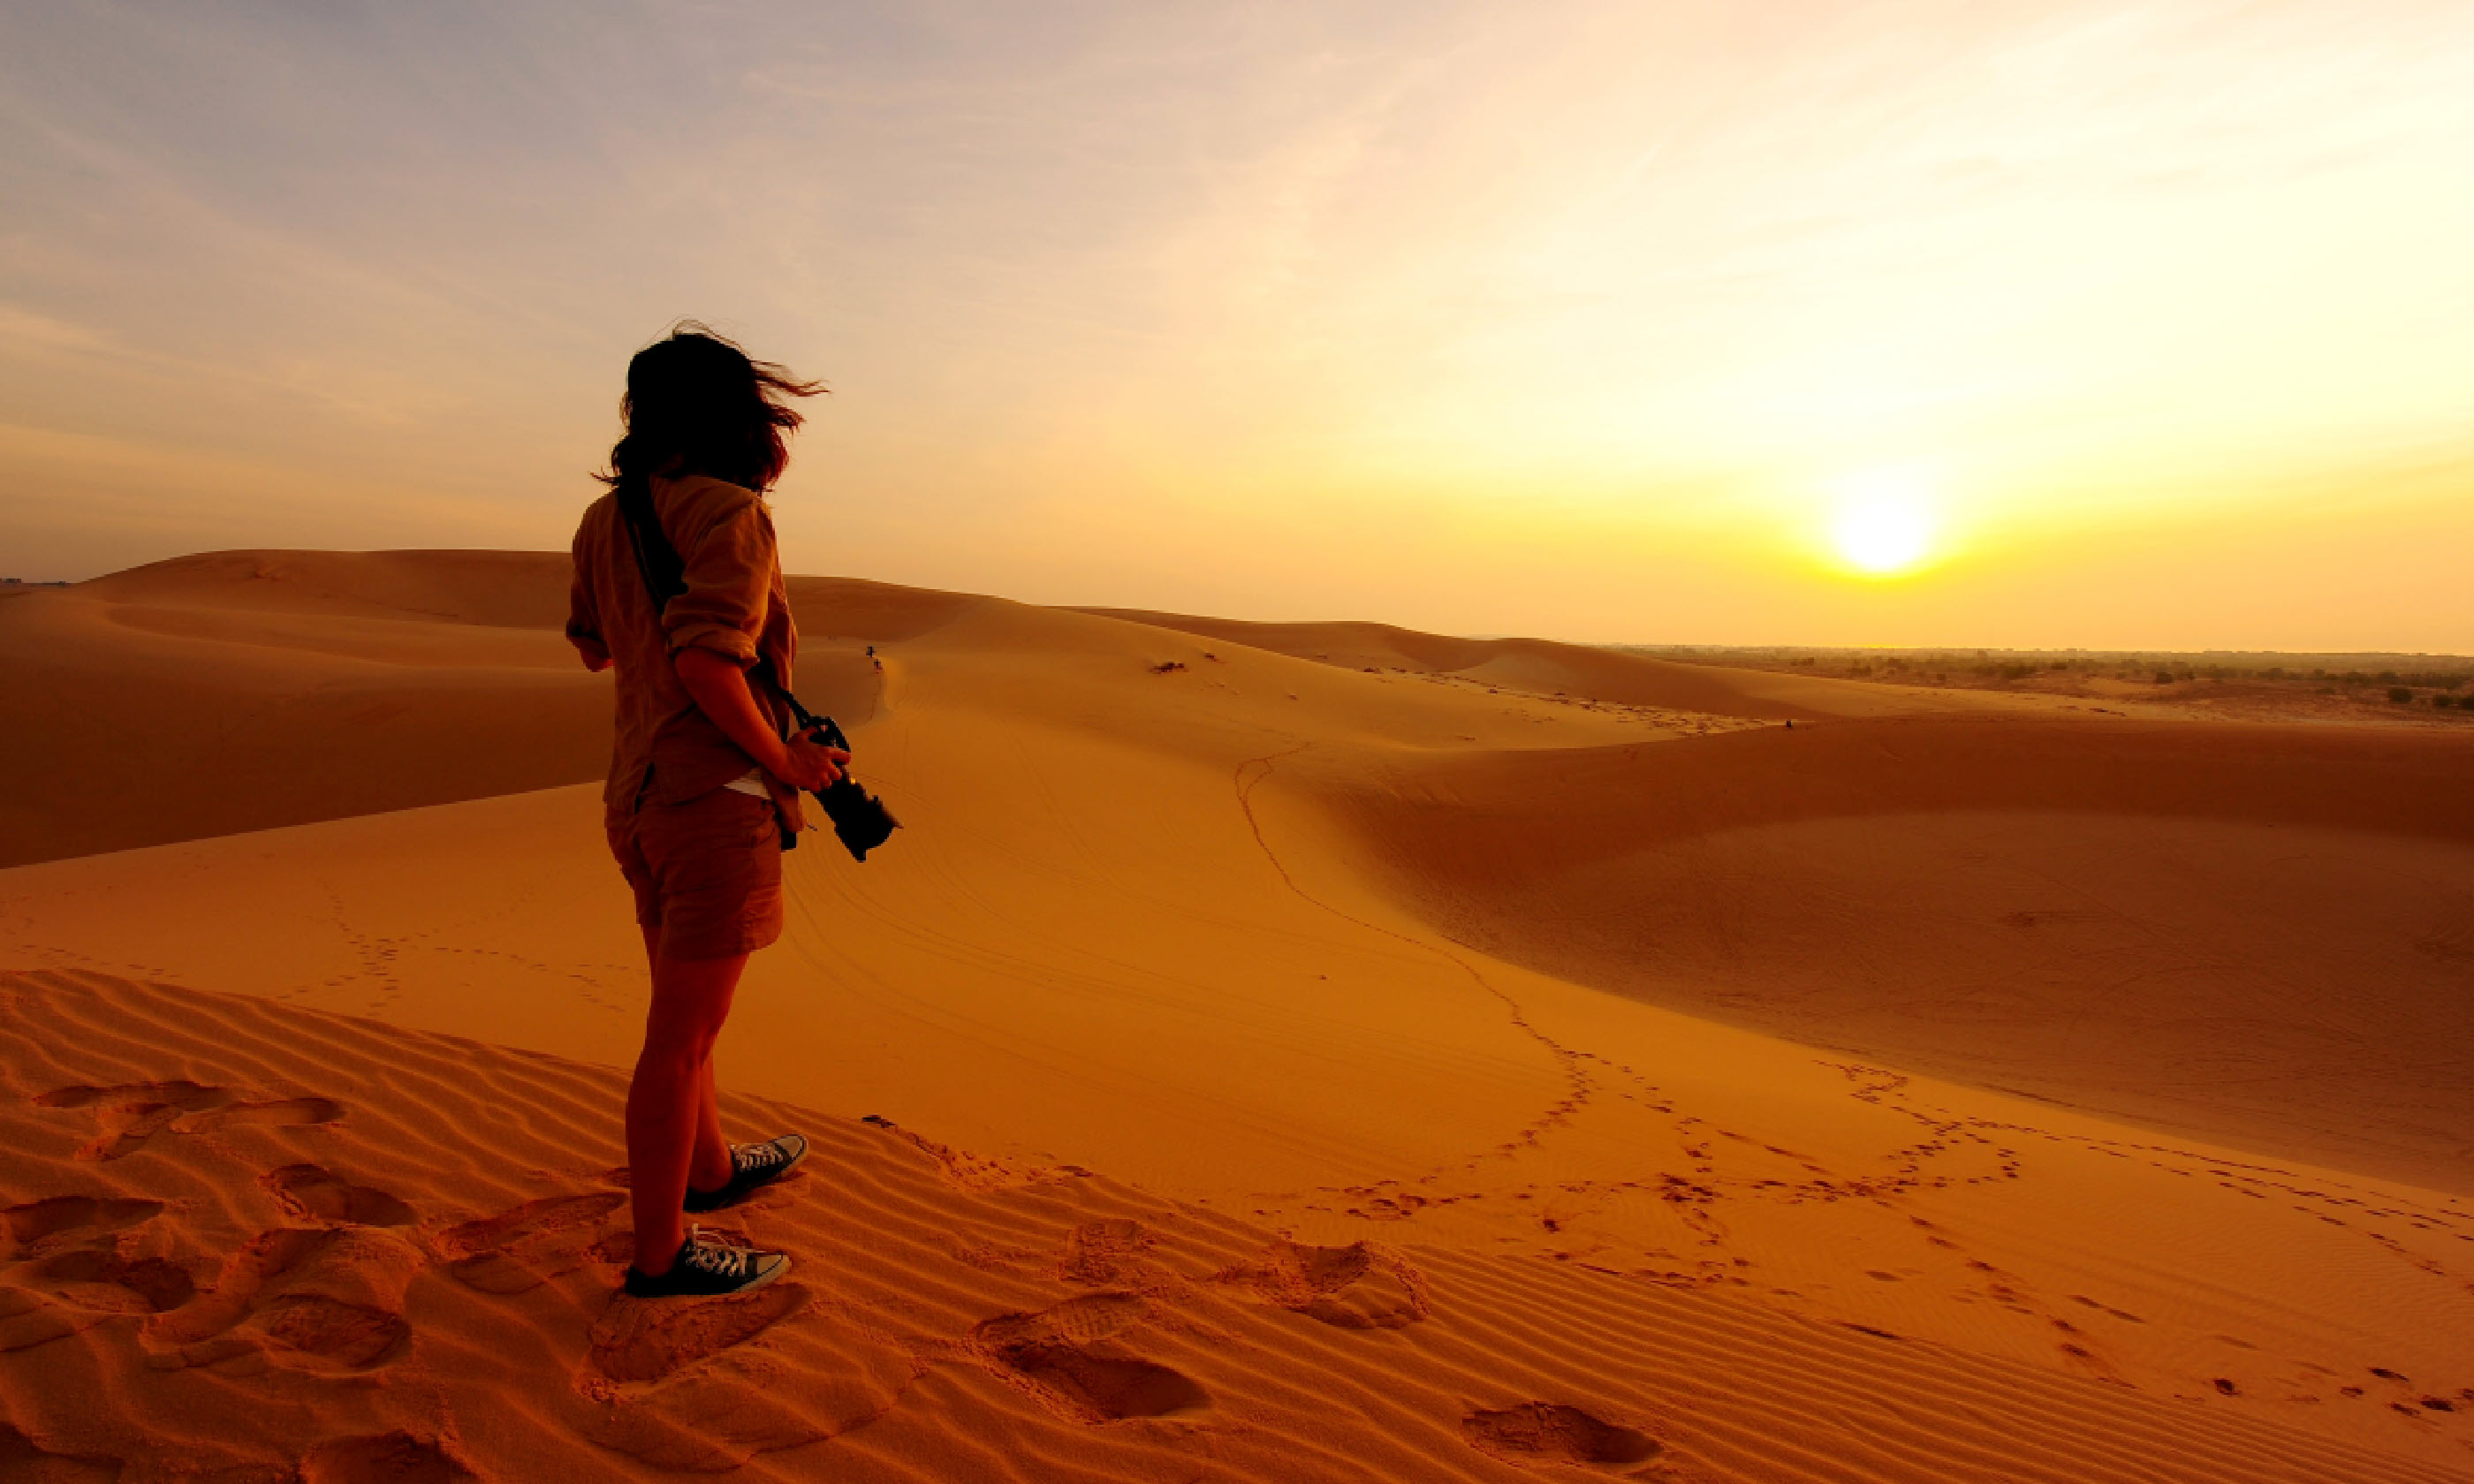 Photographer in the desert (Shutterstock: see credit below)